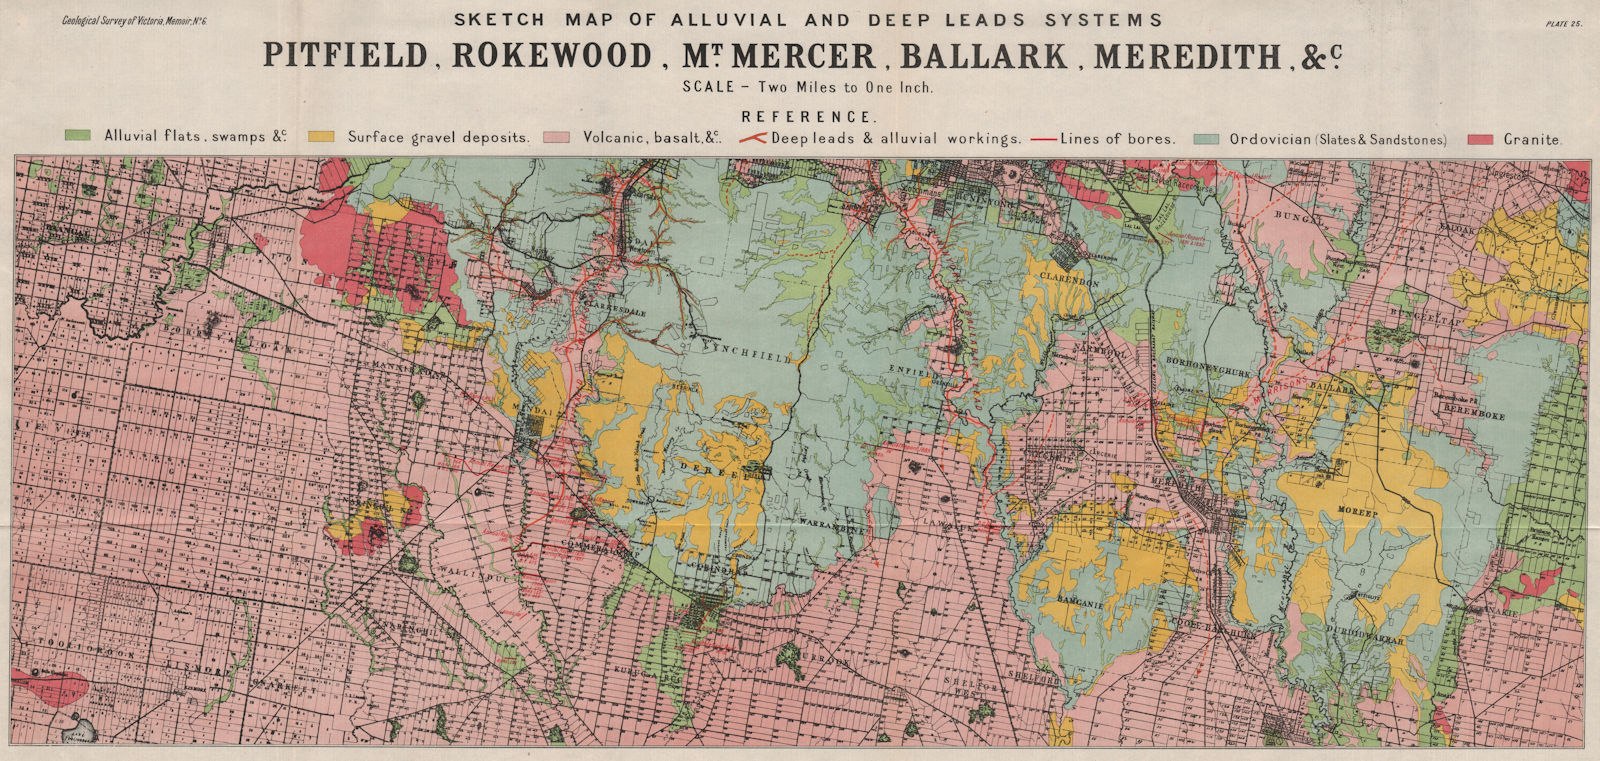 Pitfield Rokewood Mt Mercer Ballark Meredith mines geology. Victoria 1909 map